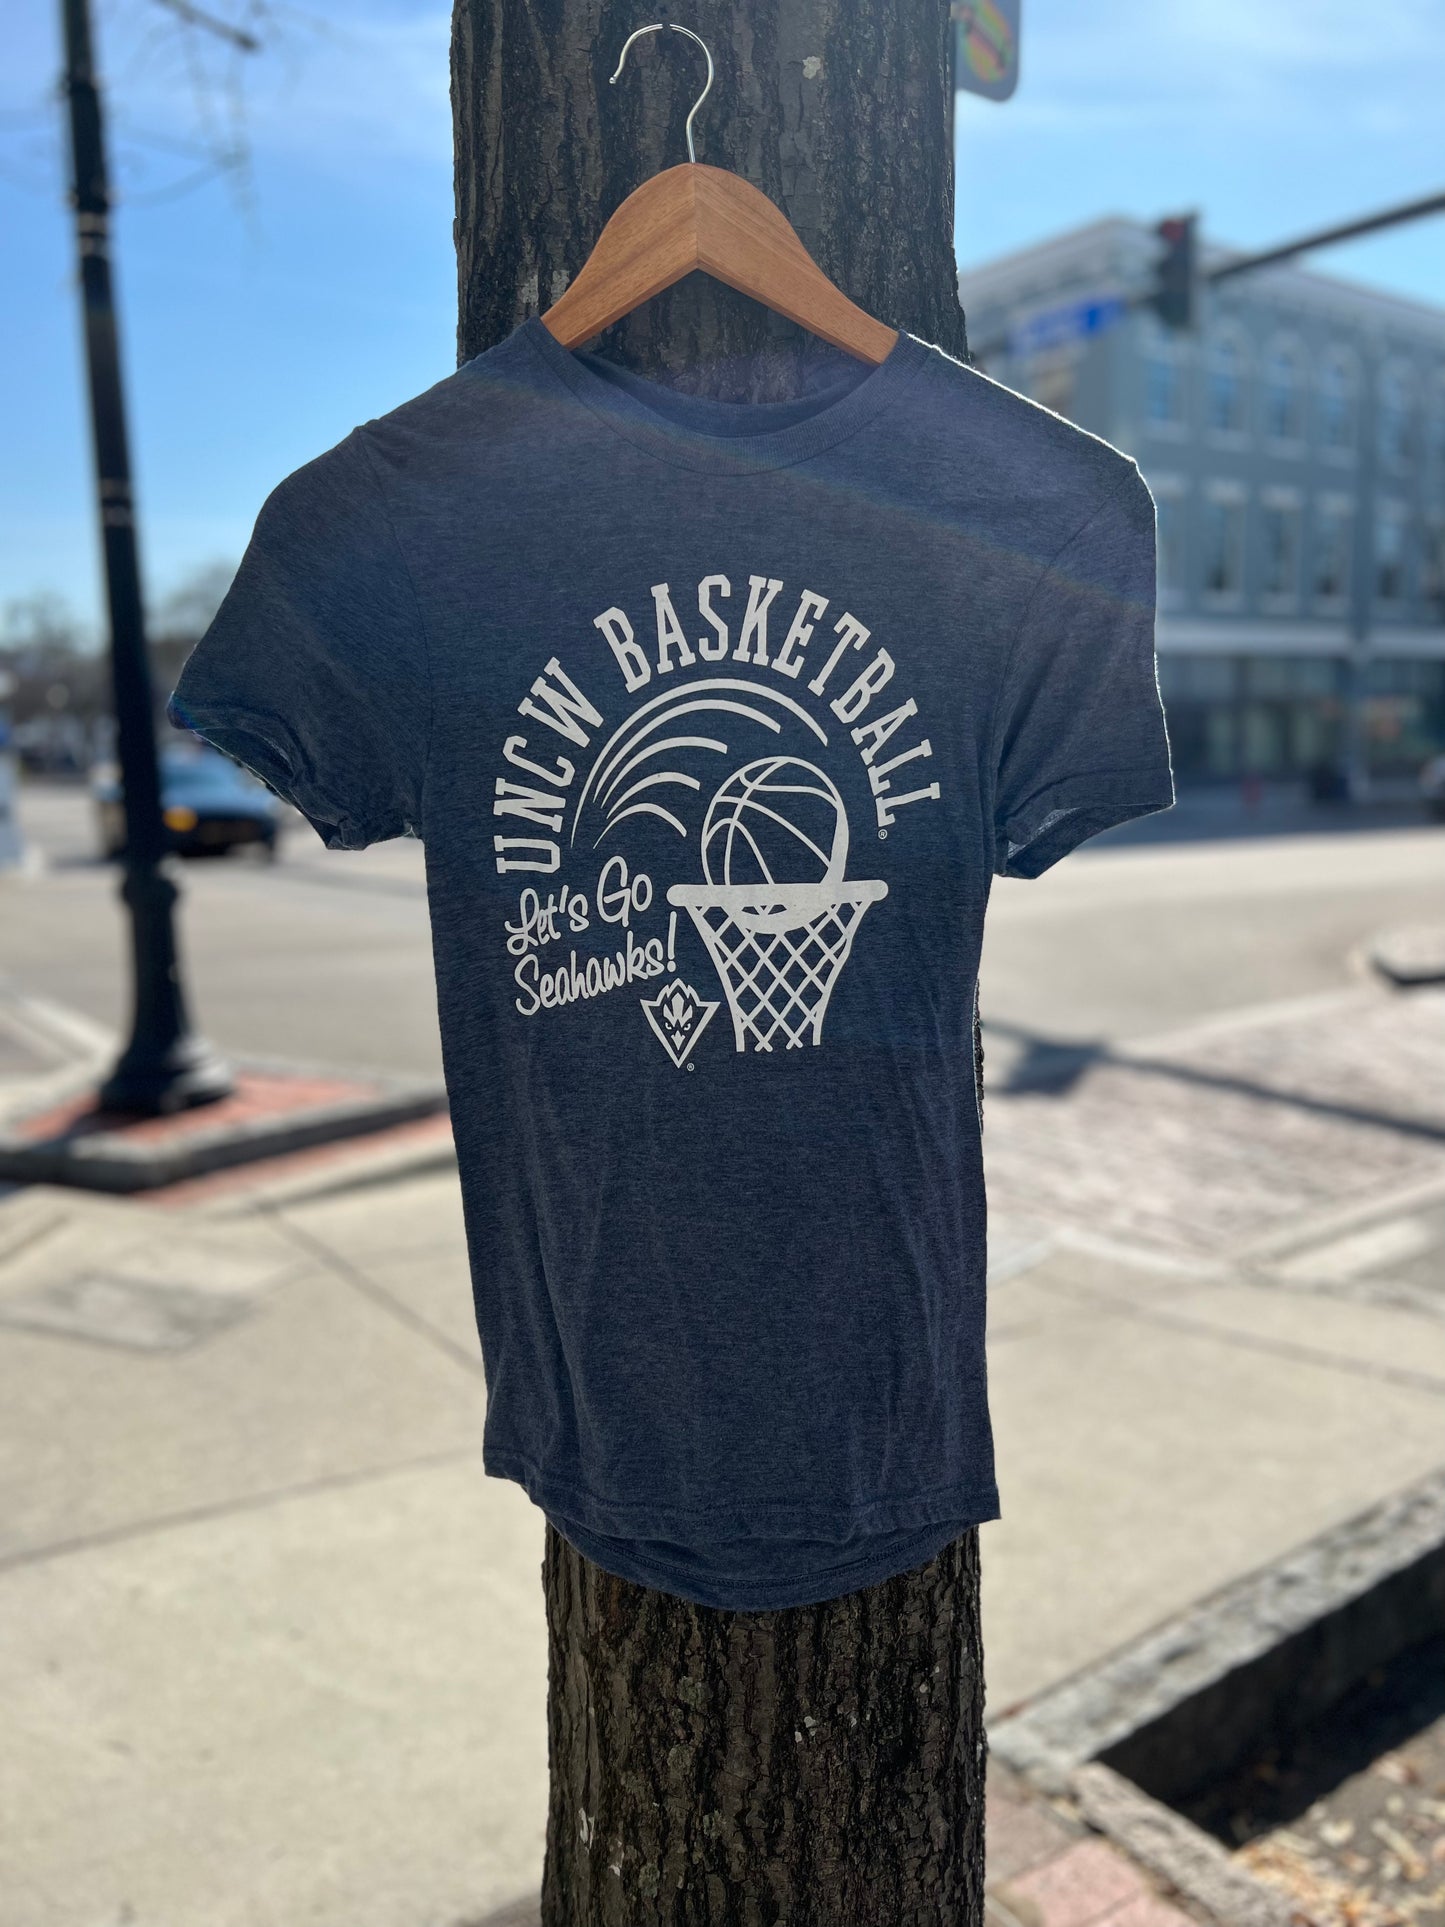 UNCW Basketball - T Shirt - Mid Night Navy